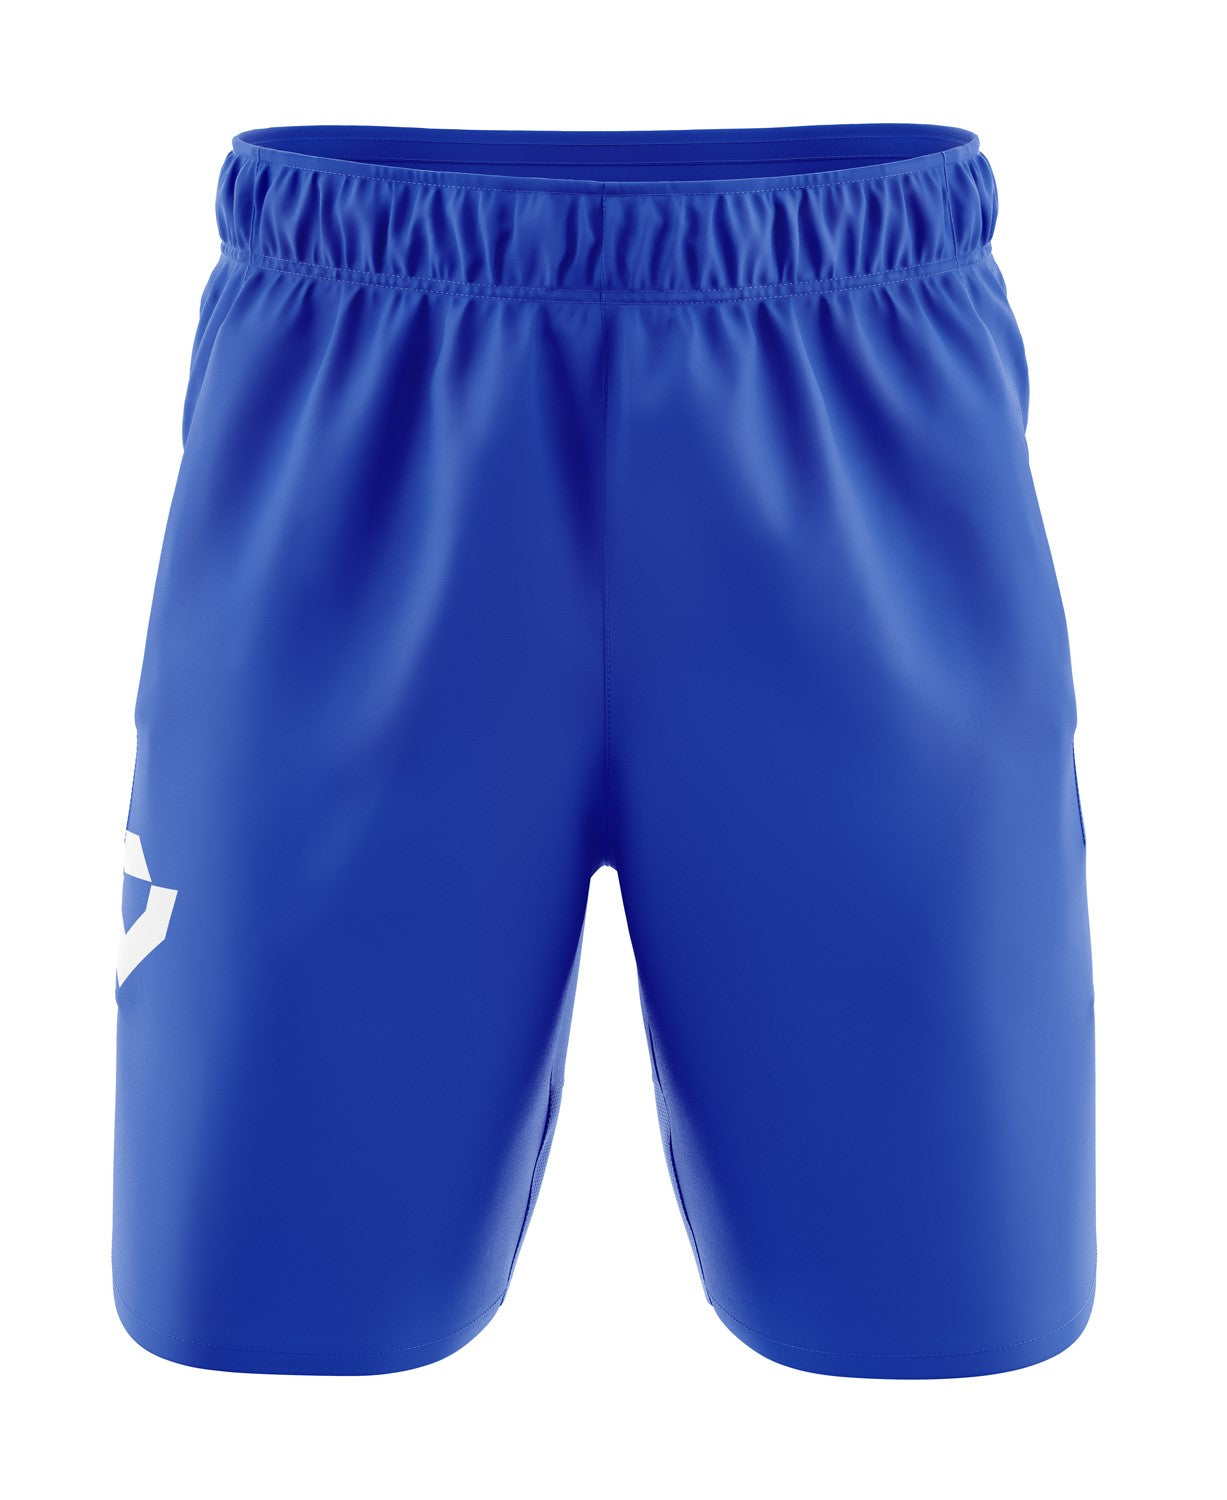 DeMarini Mens Microfiber Shorts - Royal Blue